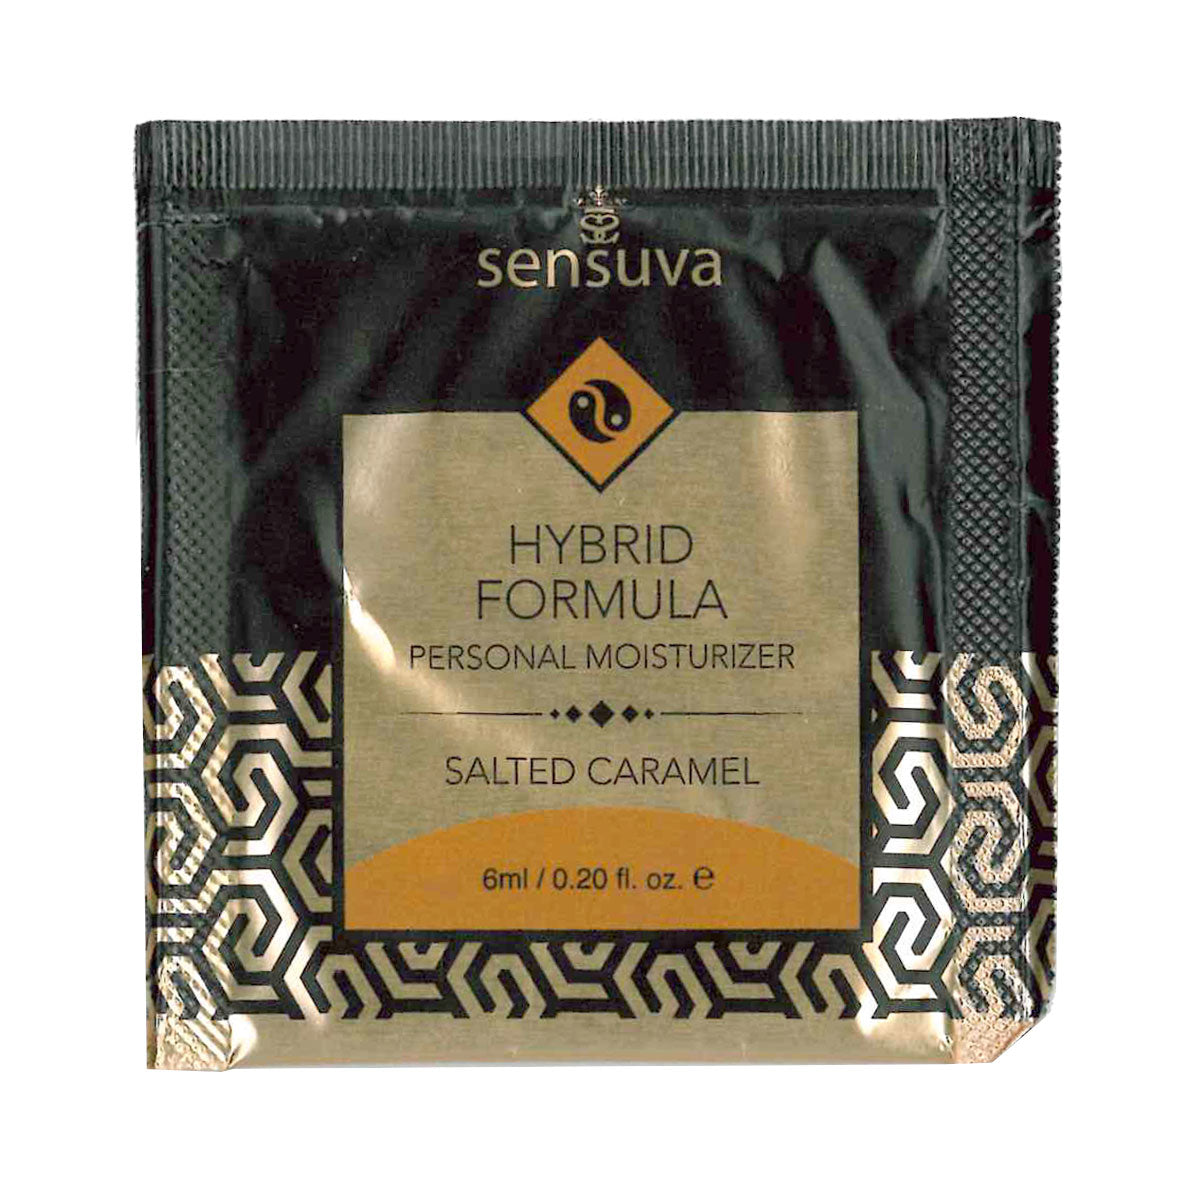 Sensuva – Hybrid Formula Personal Moisturizer - Salted Caramel - Foil 6ml/0.20 fl oz.